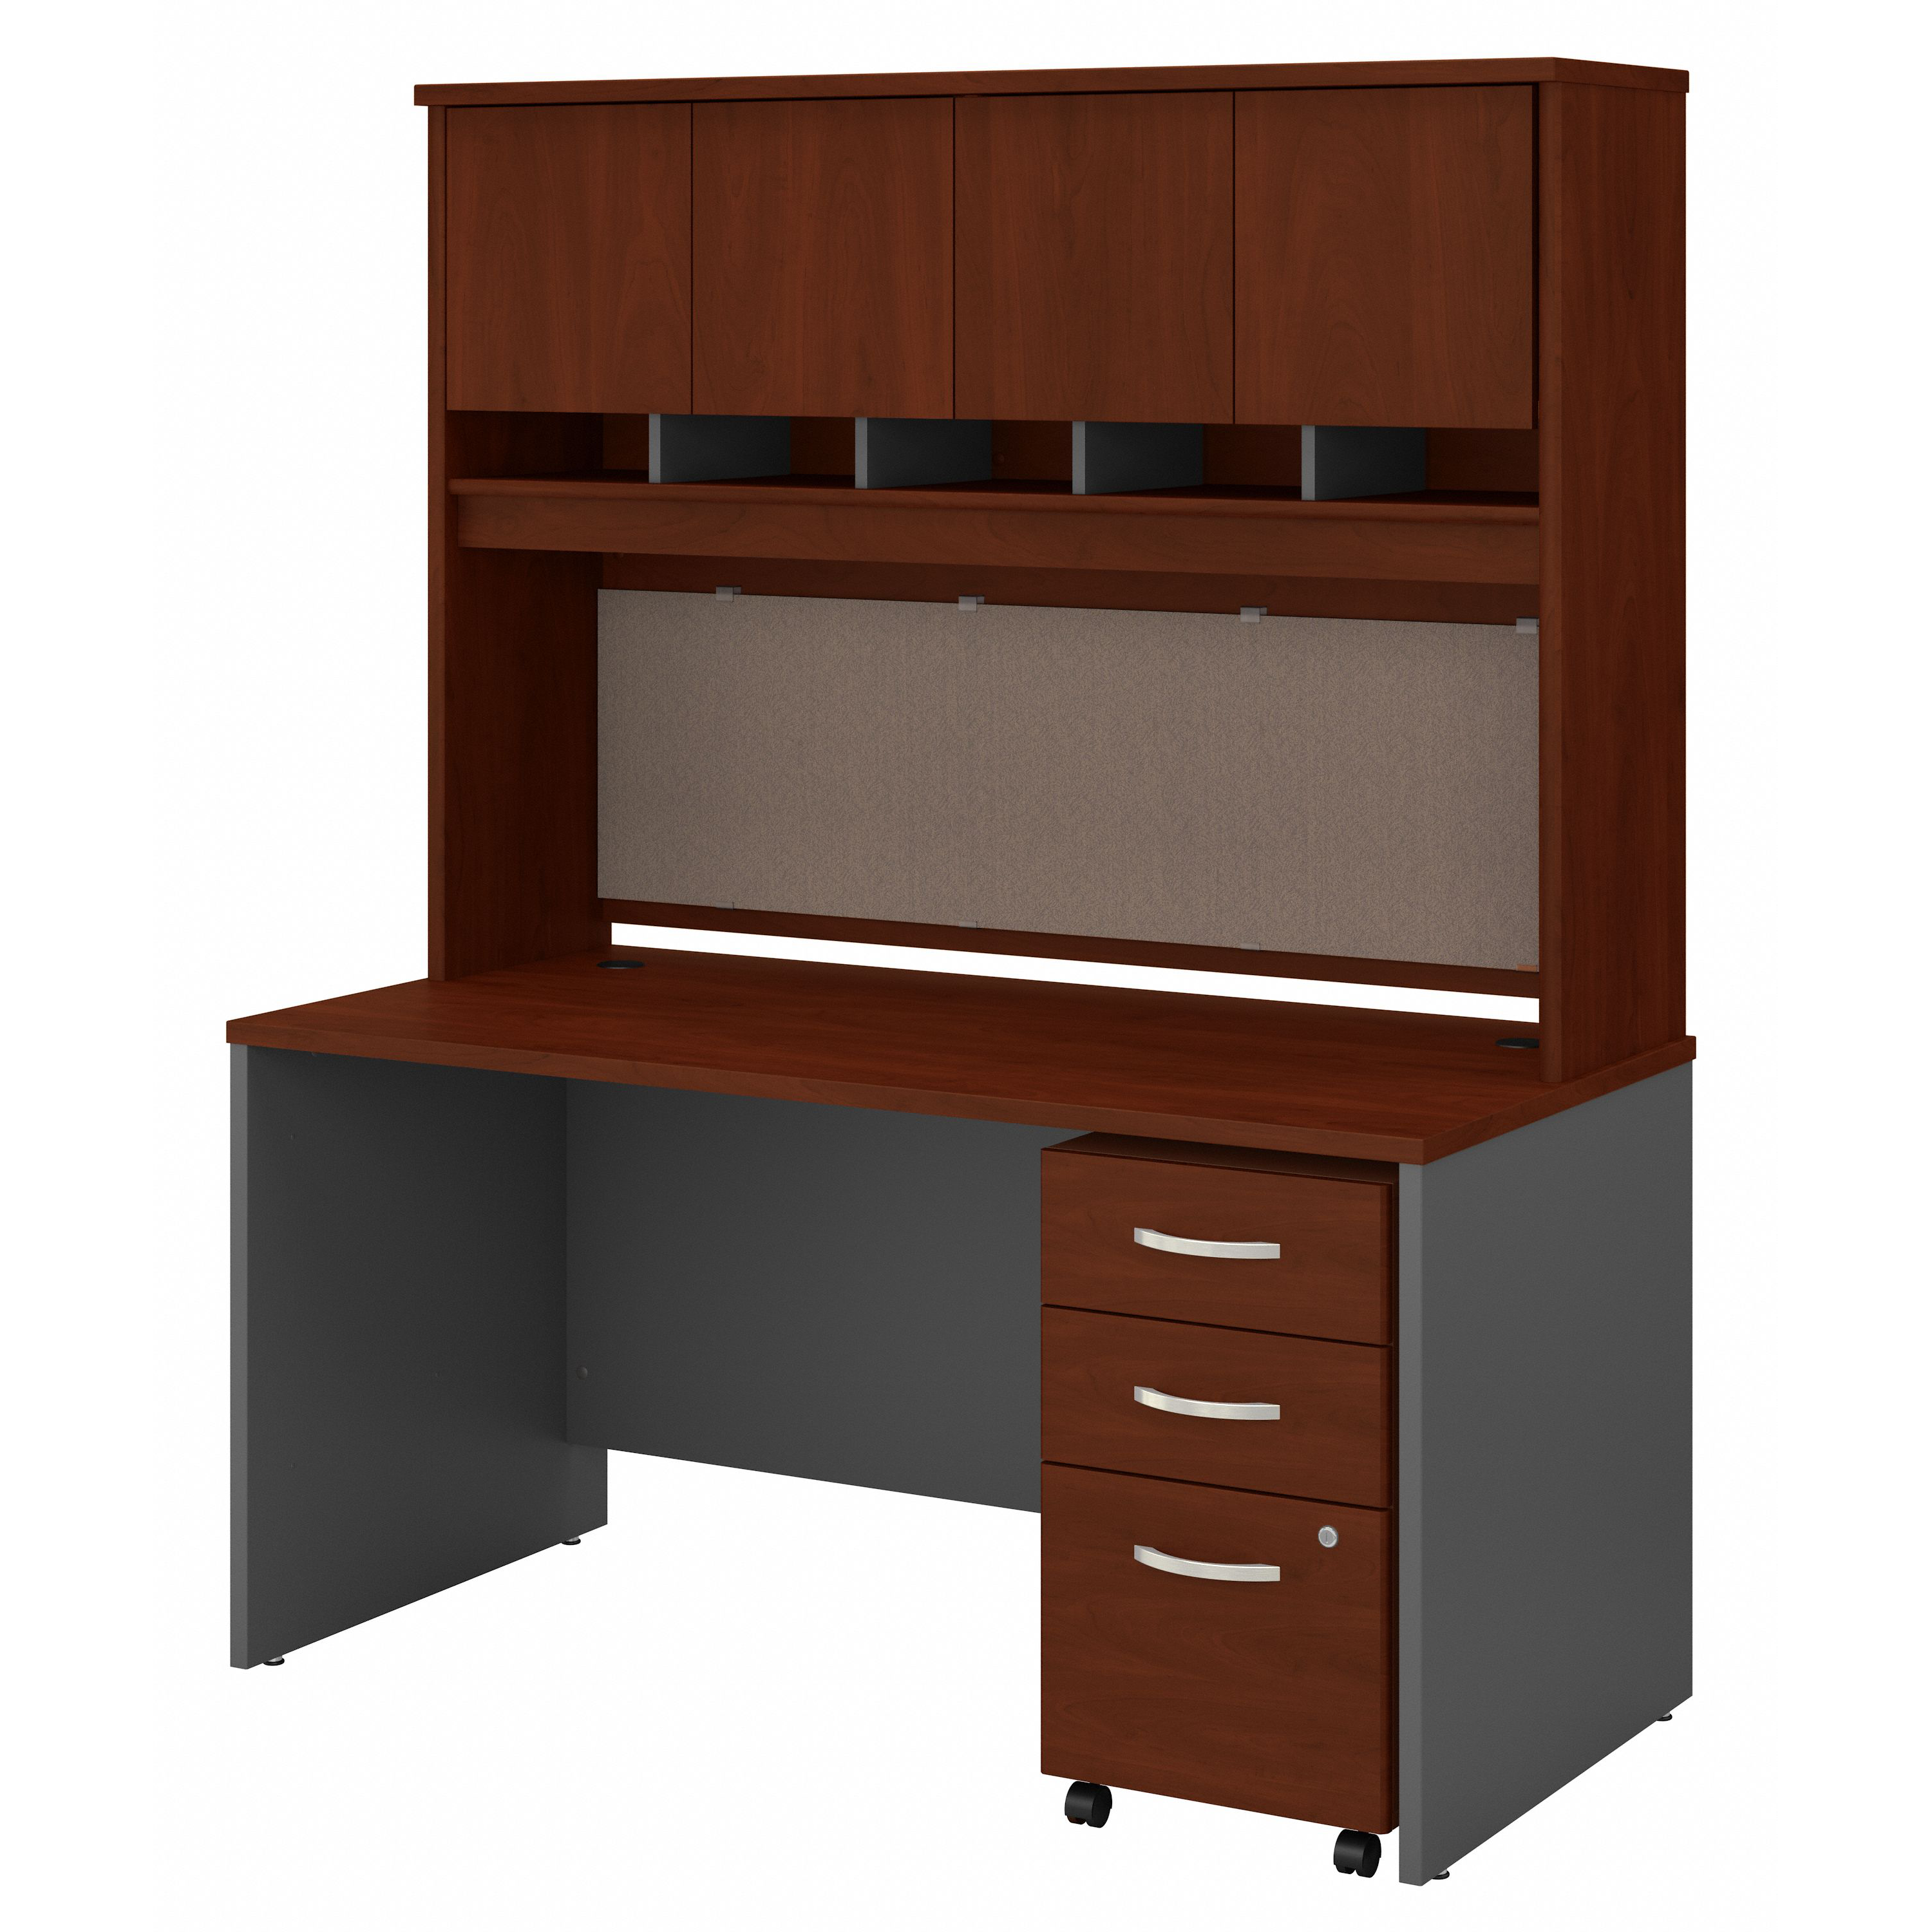 Shop Bush Business Furniture Series C 60W x 30D Office Desk with Hutch and Mobile File Cabinet 02 SRC145HCSU #color_hansen cherry/graphite gray